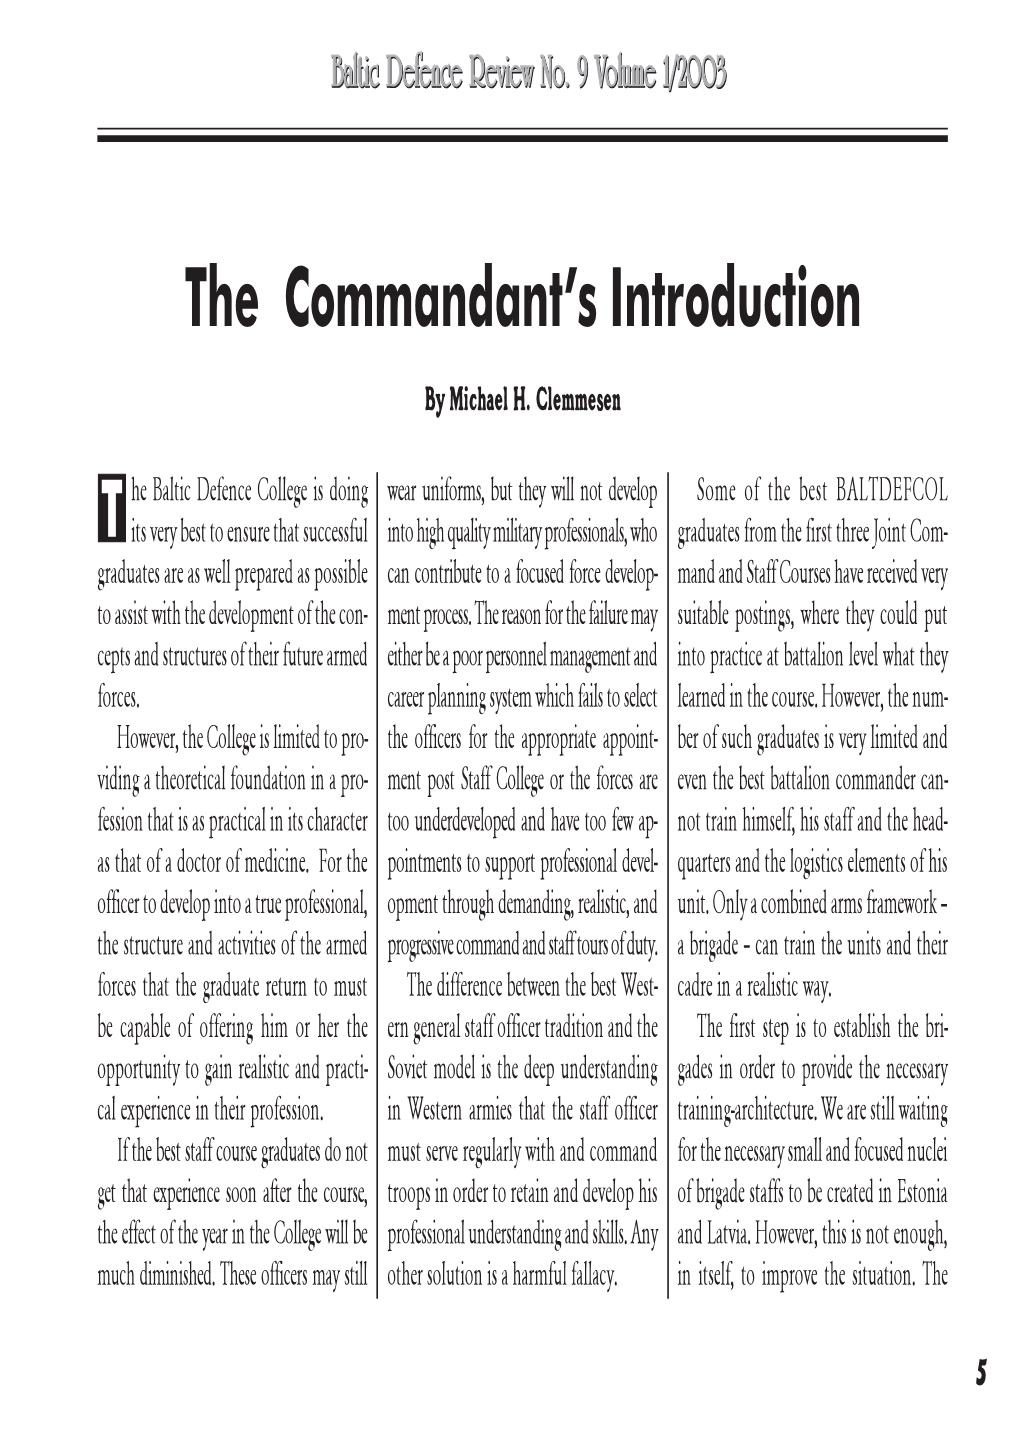 The Commandant's Introduction